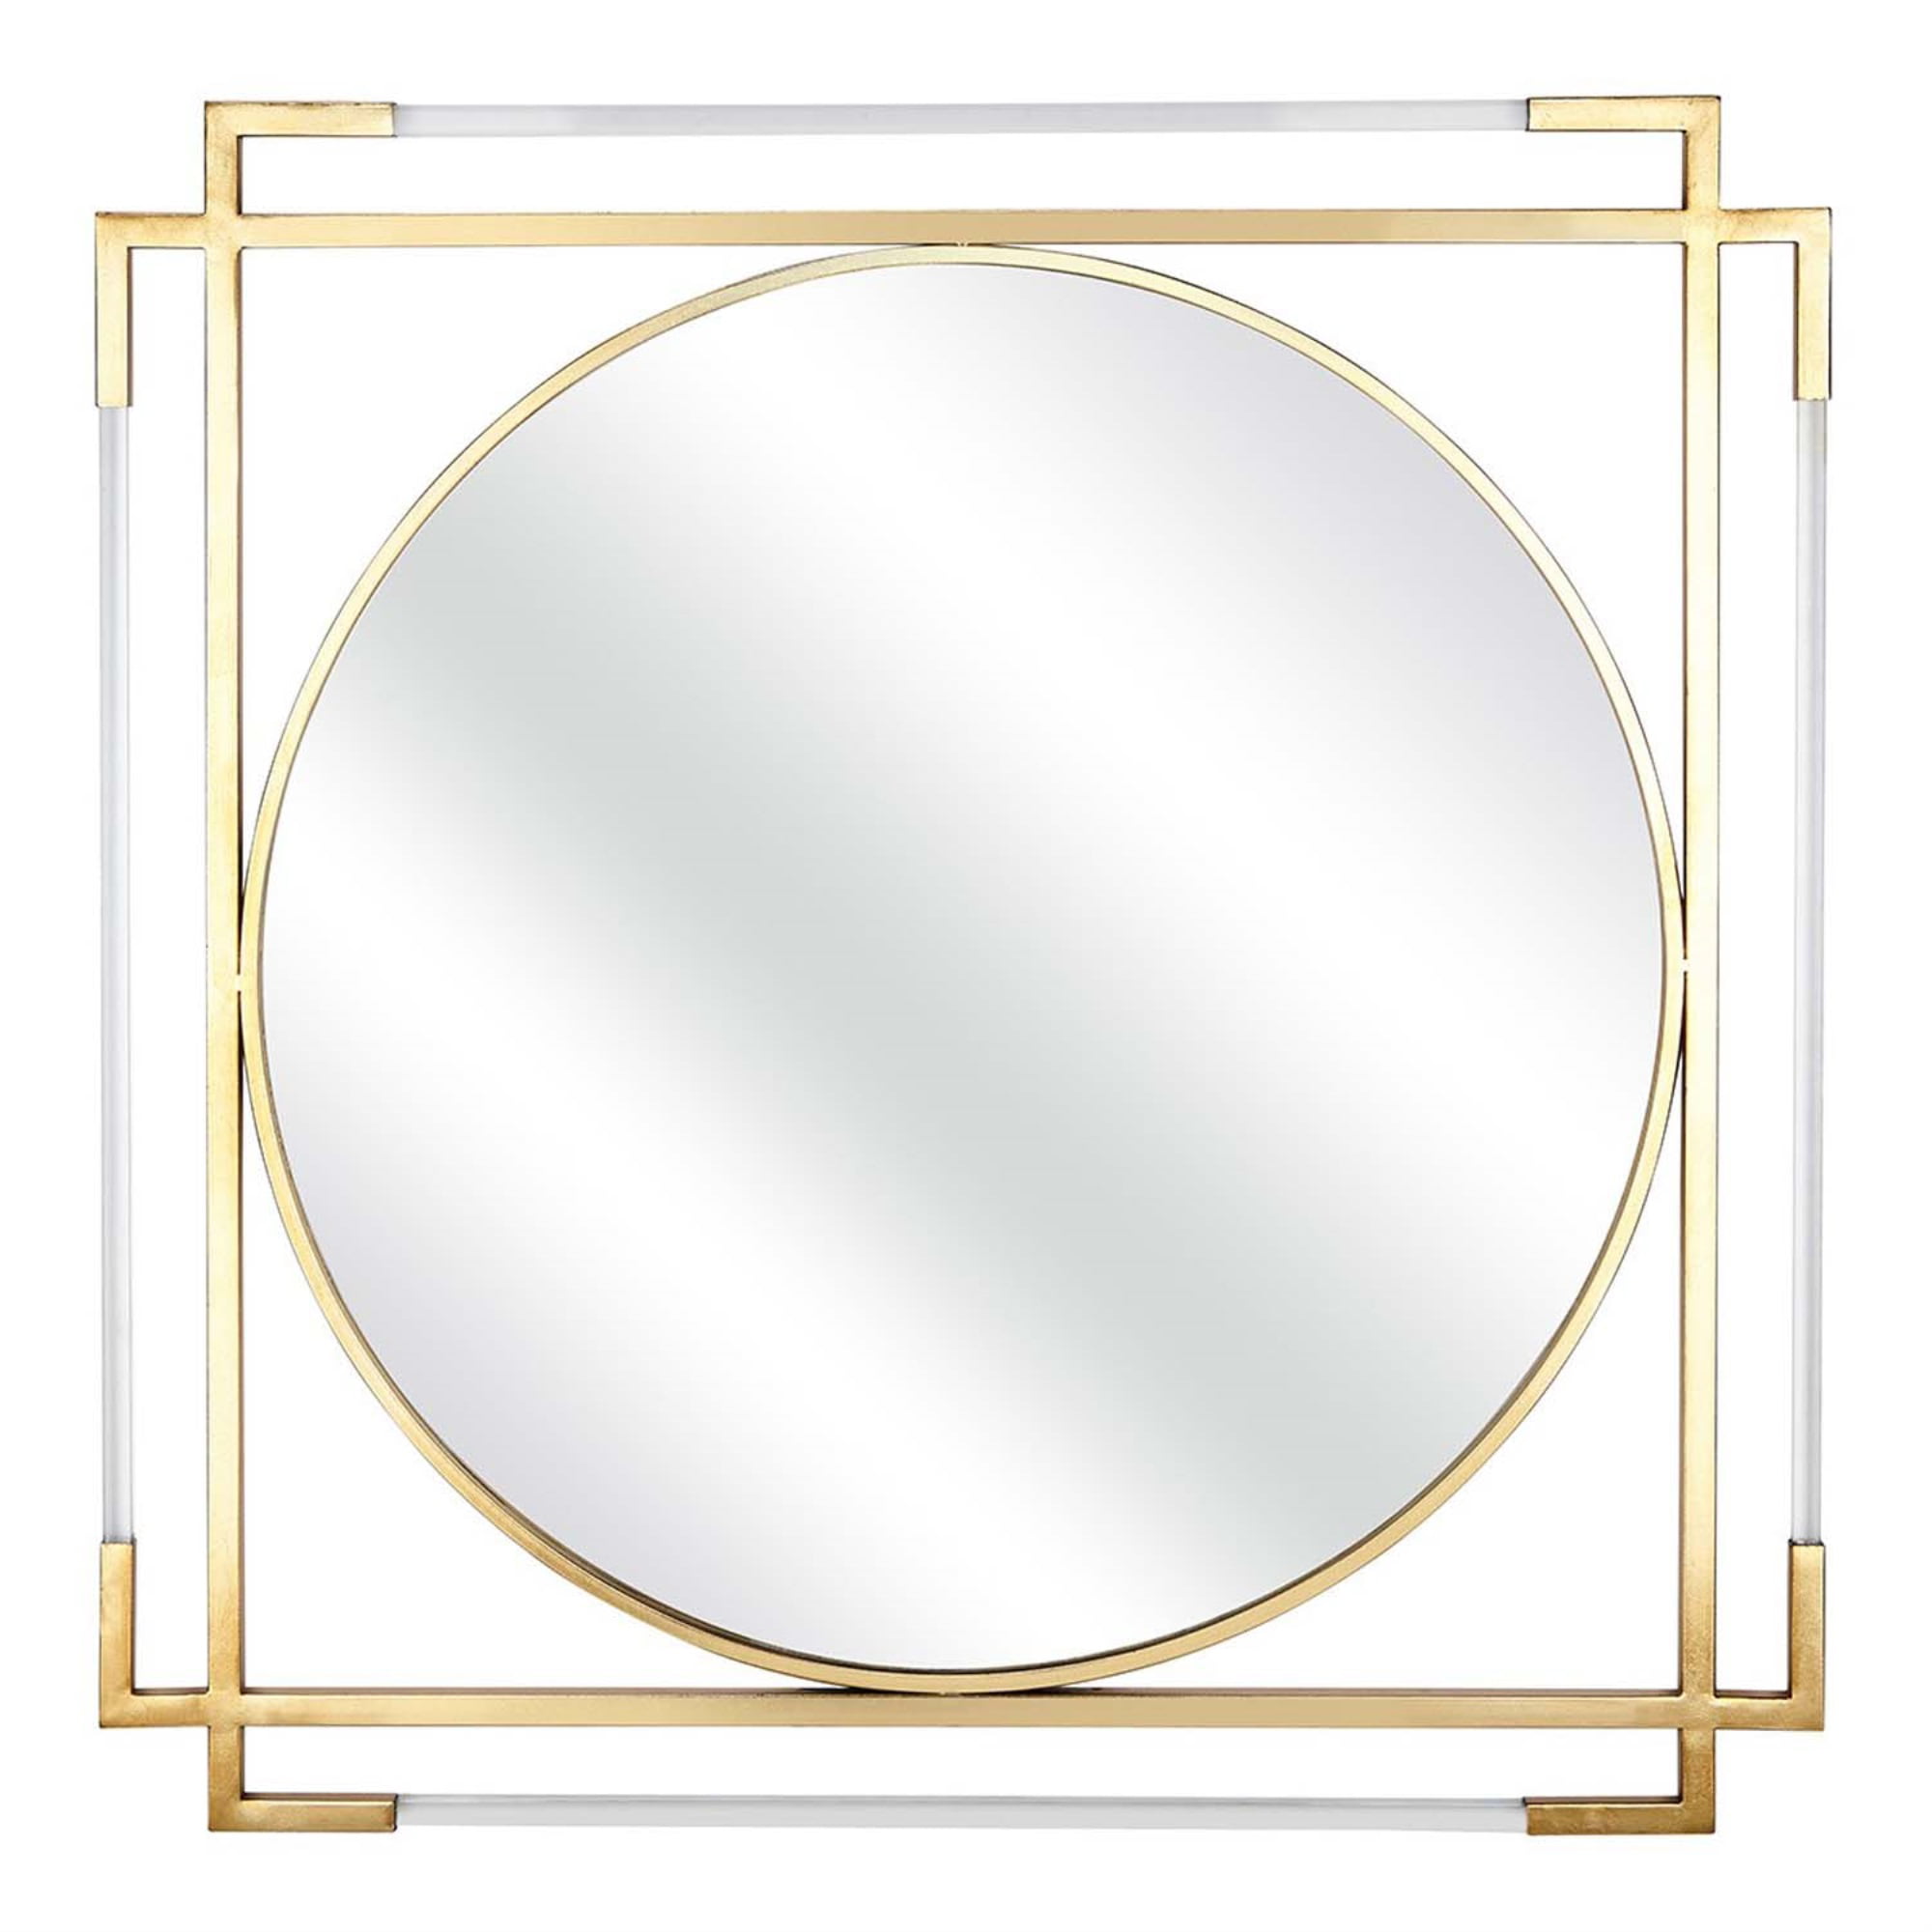 Iron And Acrylic Framed Wall Mirror In, Acrylic Framed Wall Mirror